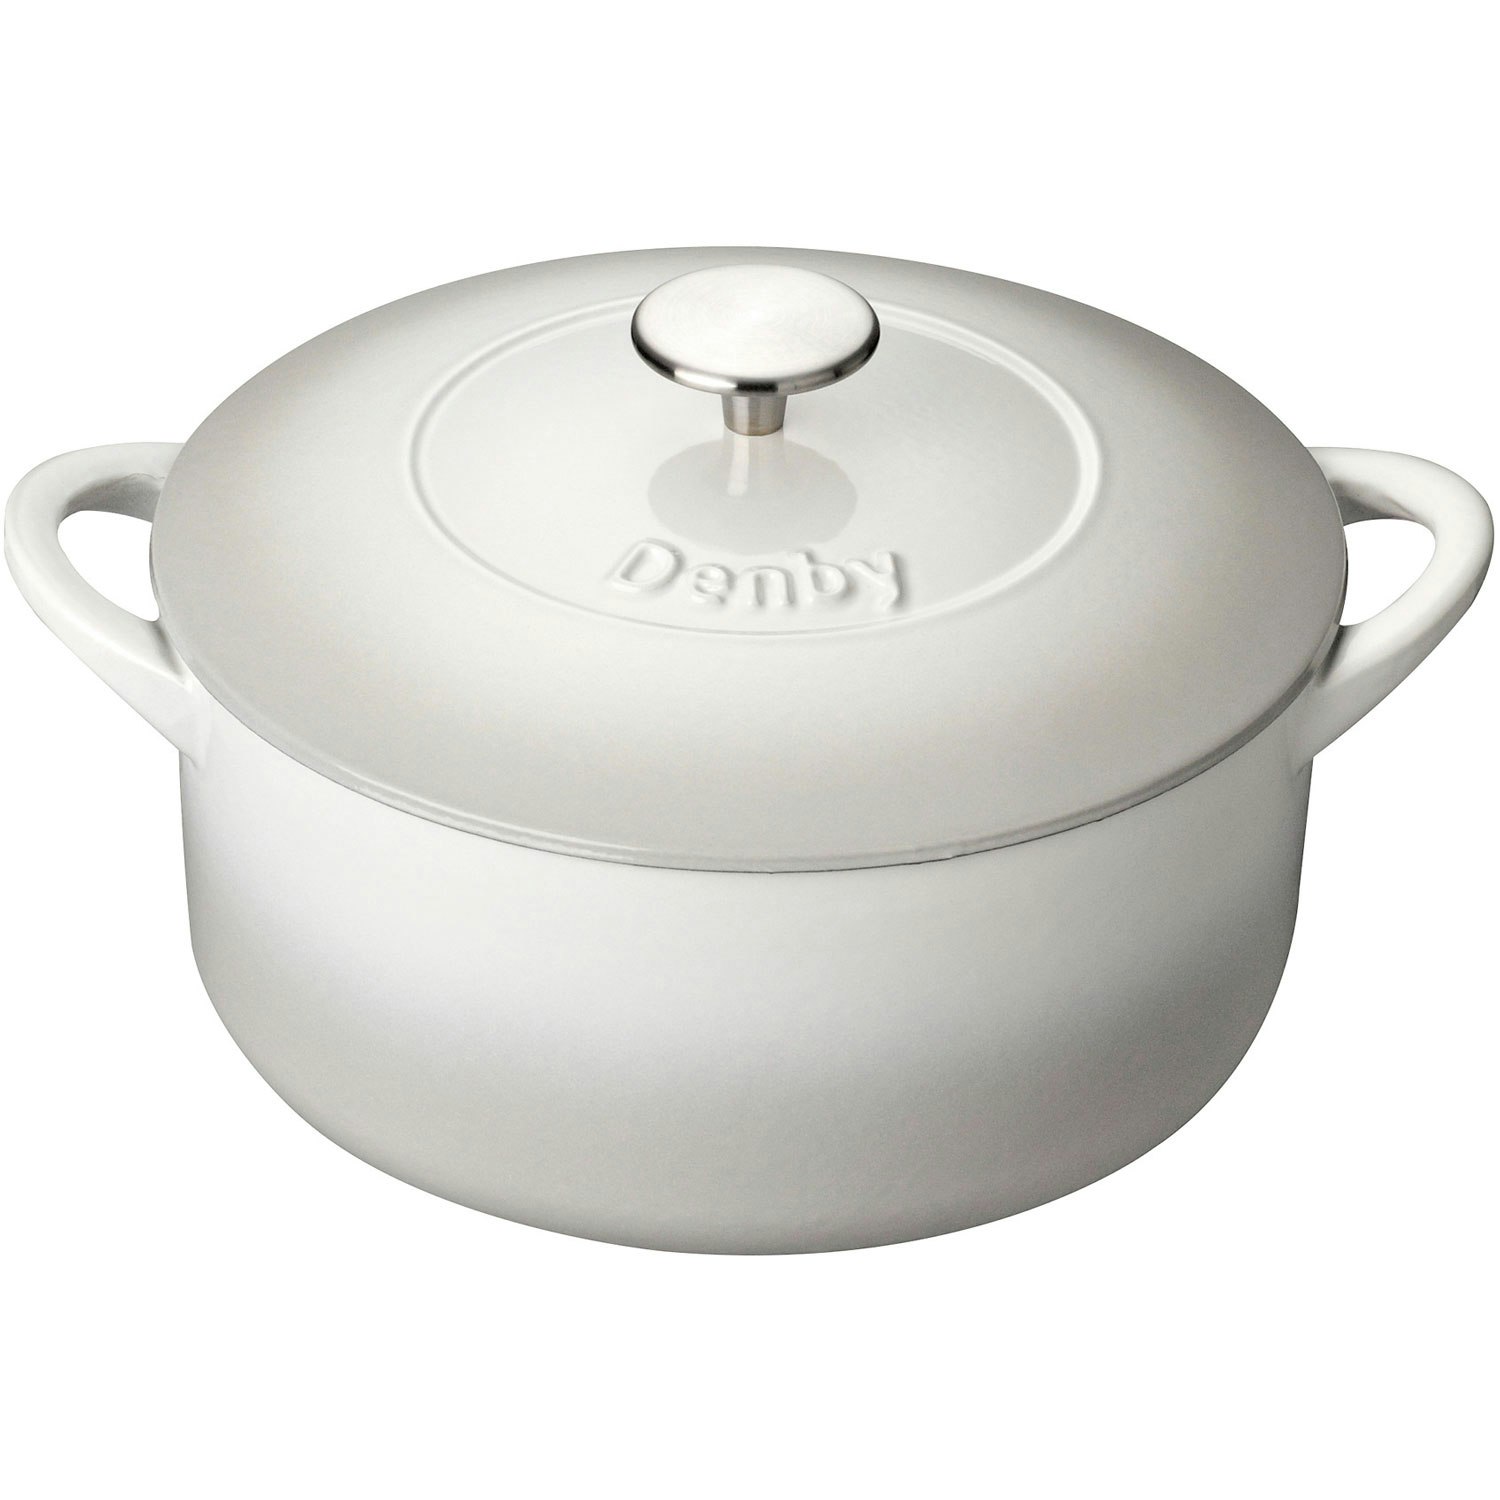 https://royaldesign.com/image/10/denby-cast-iron-26cm-round-casserole-12